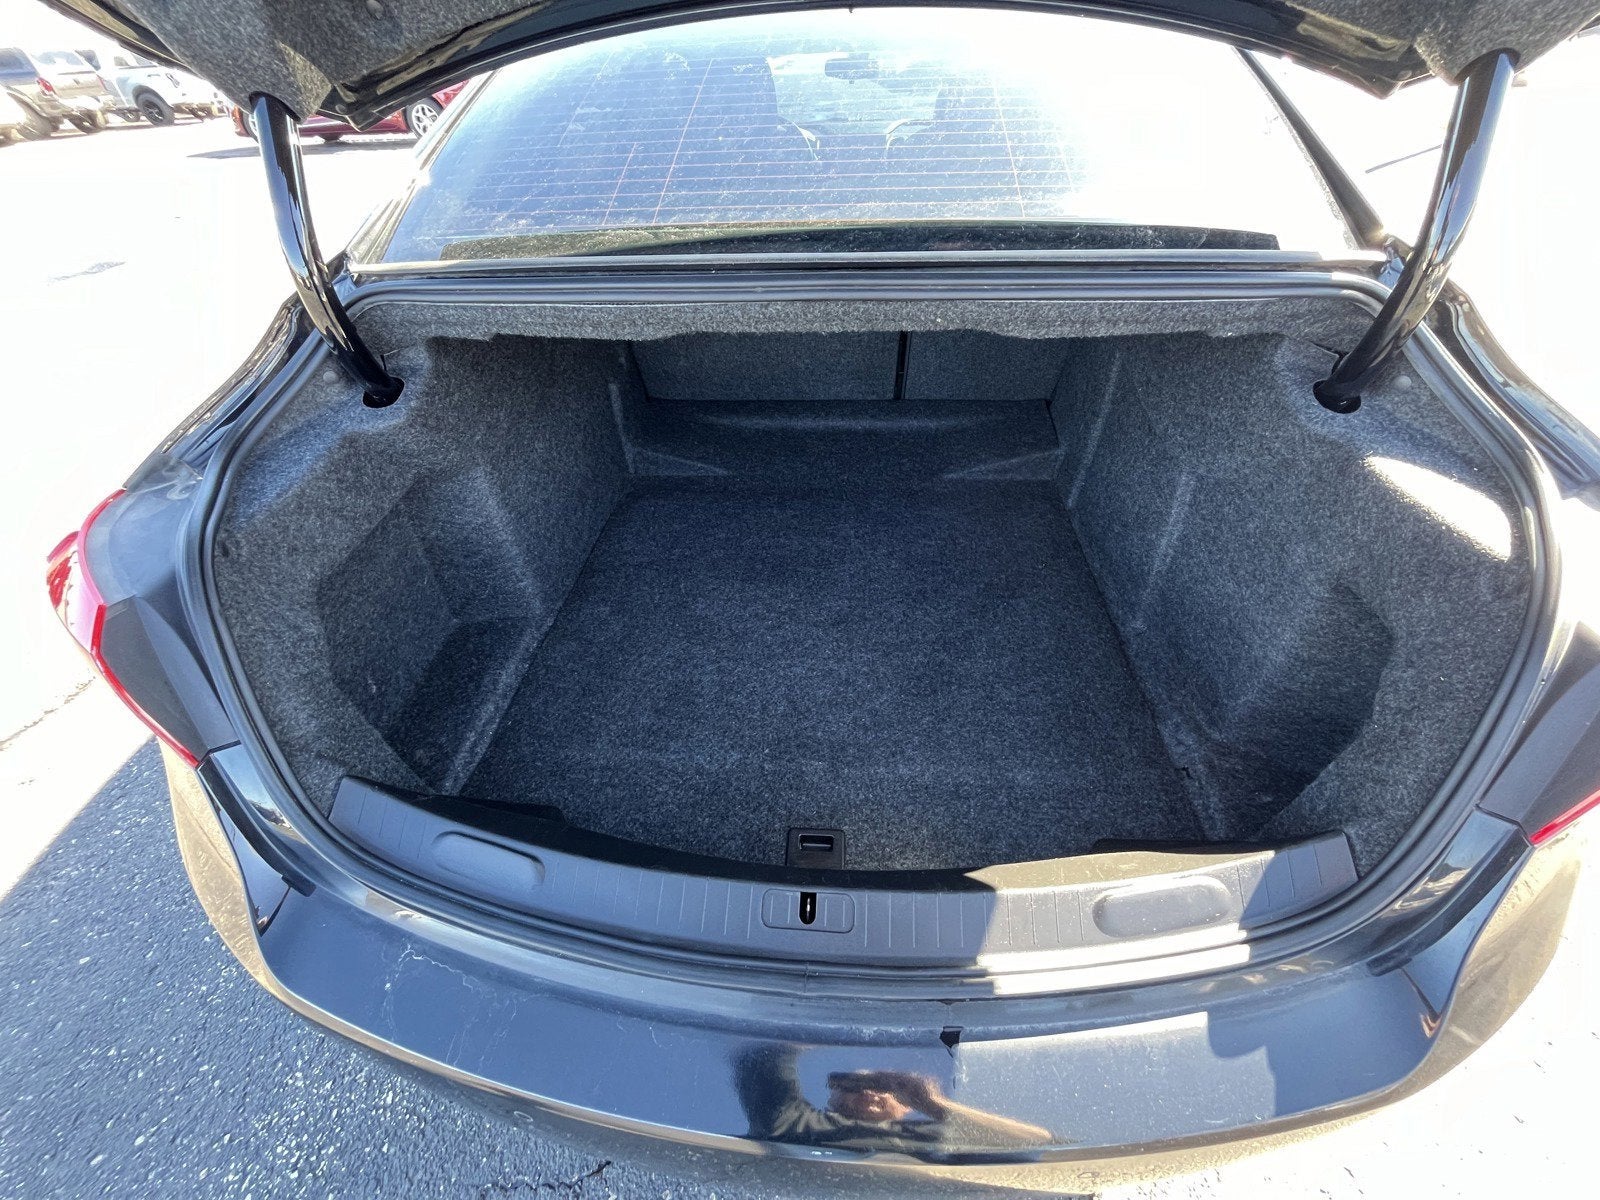 2019 Chevrolet Impala Premier